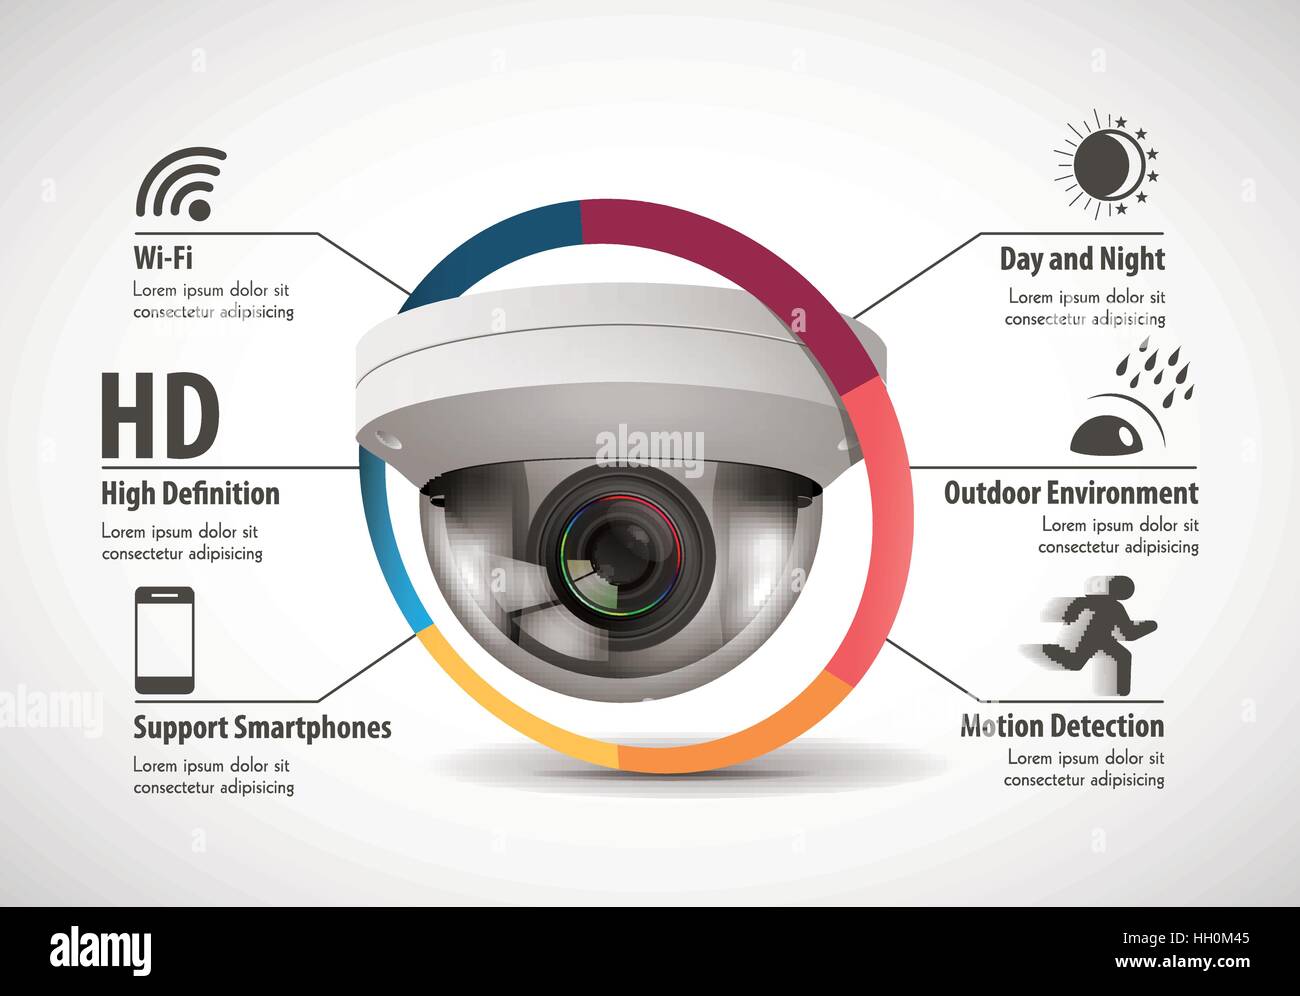 CCTV camera and DVR - digital video recorder Stock Vector